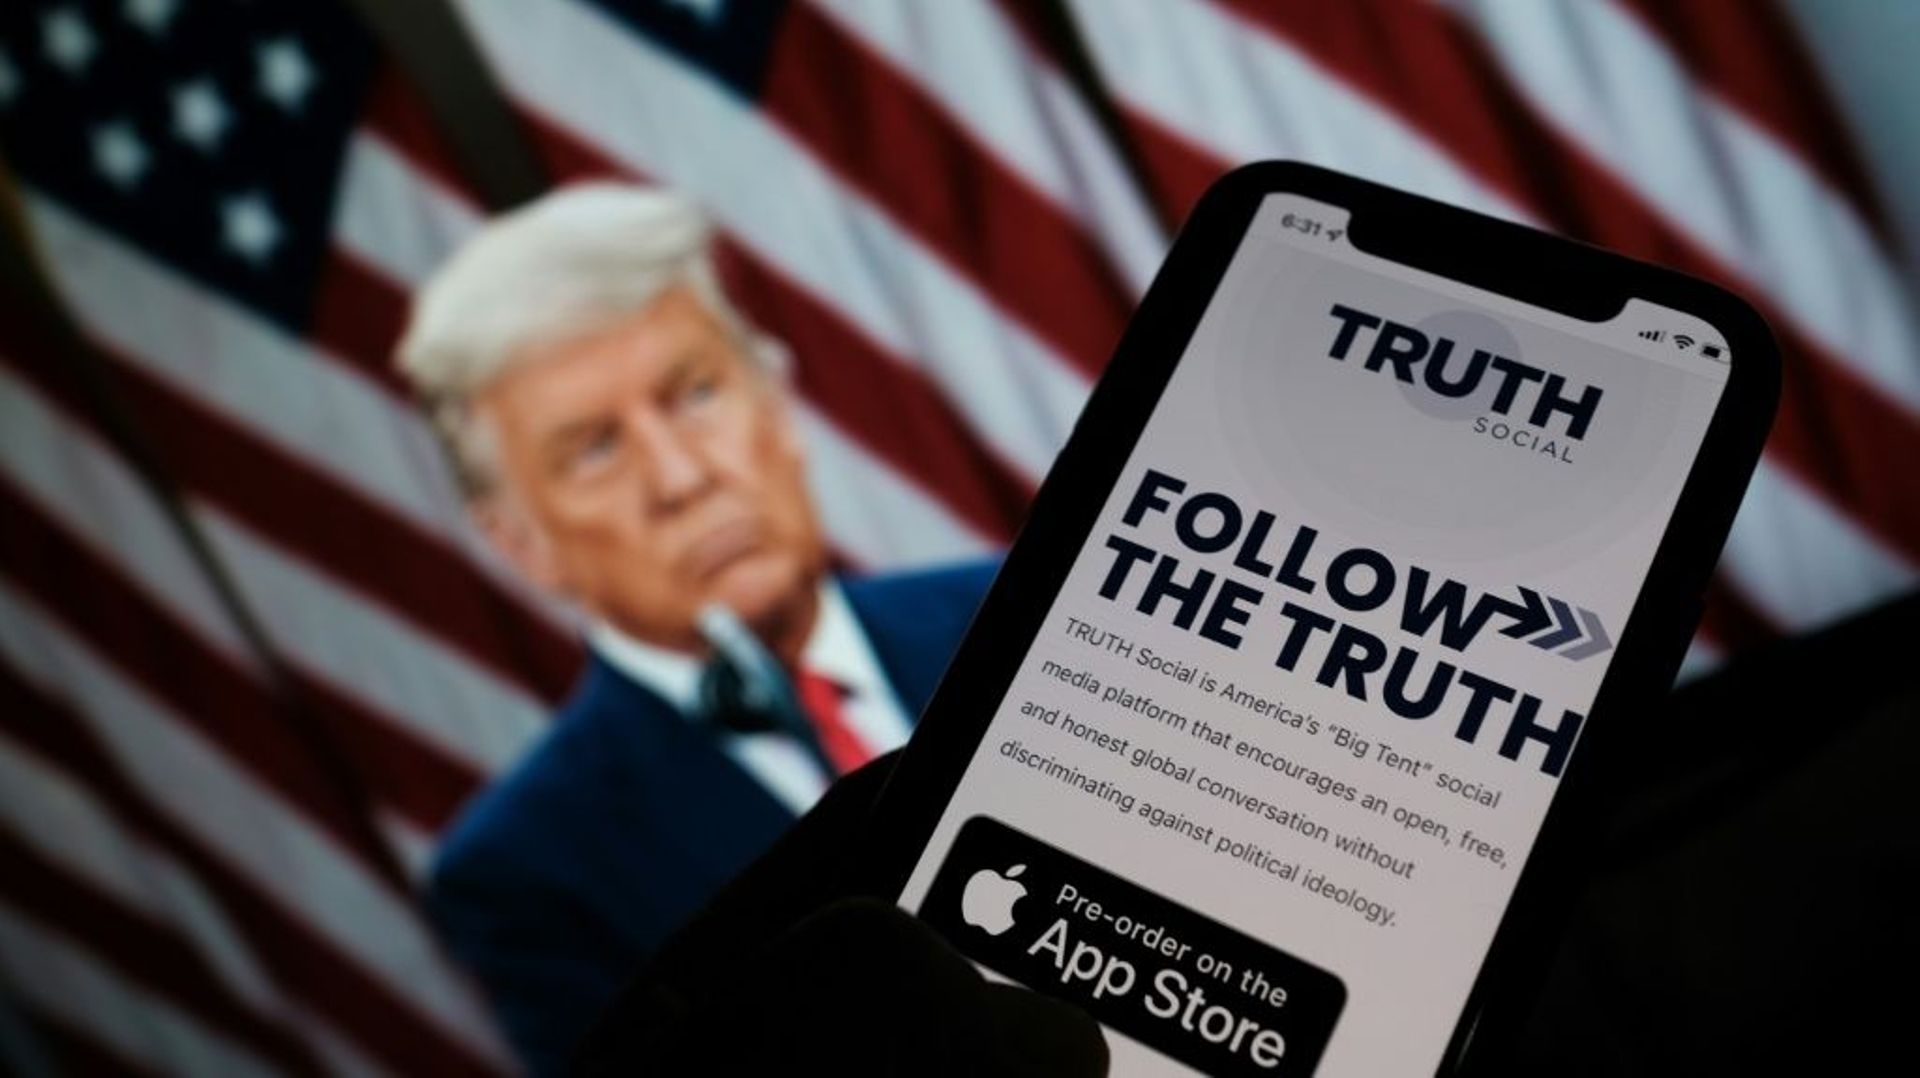 L'application "Truth social" sur l'écran d'un smartphone, devant un portrait de Donald Trump, le 20 octobre 2021 à Los Angeles